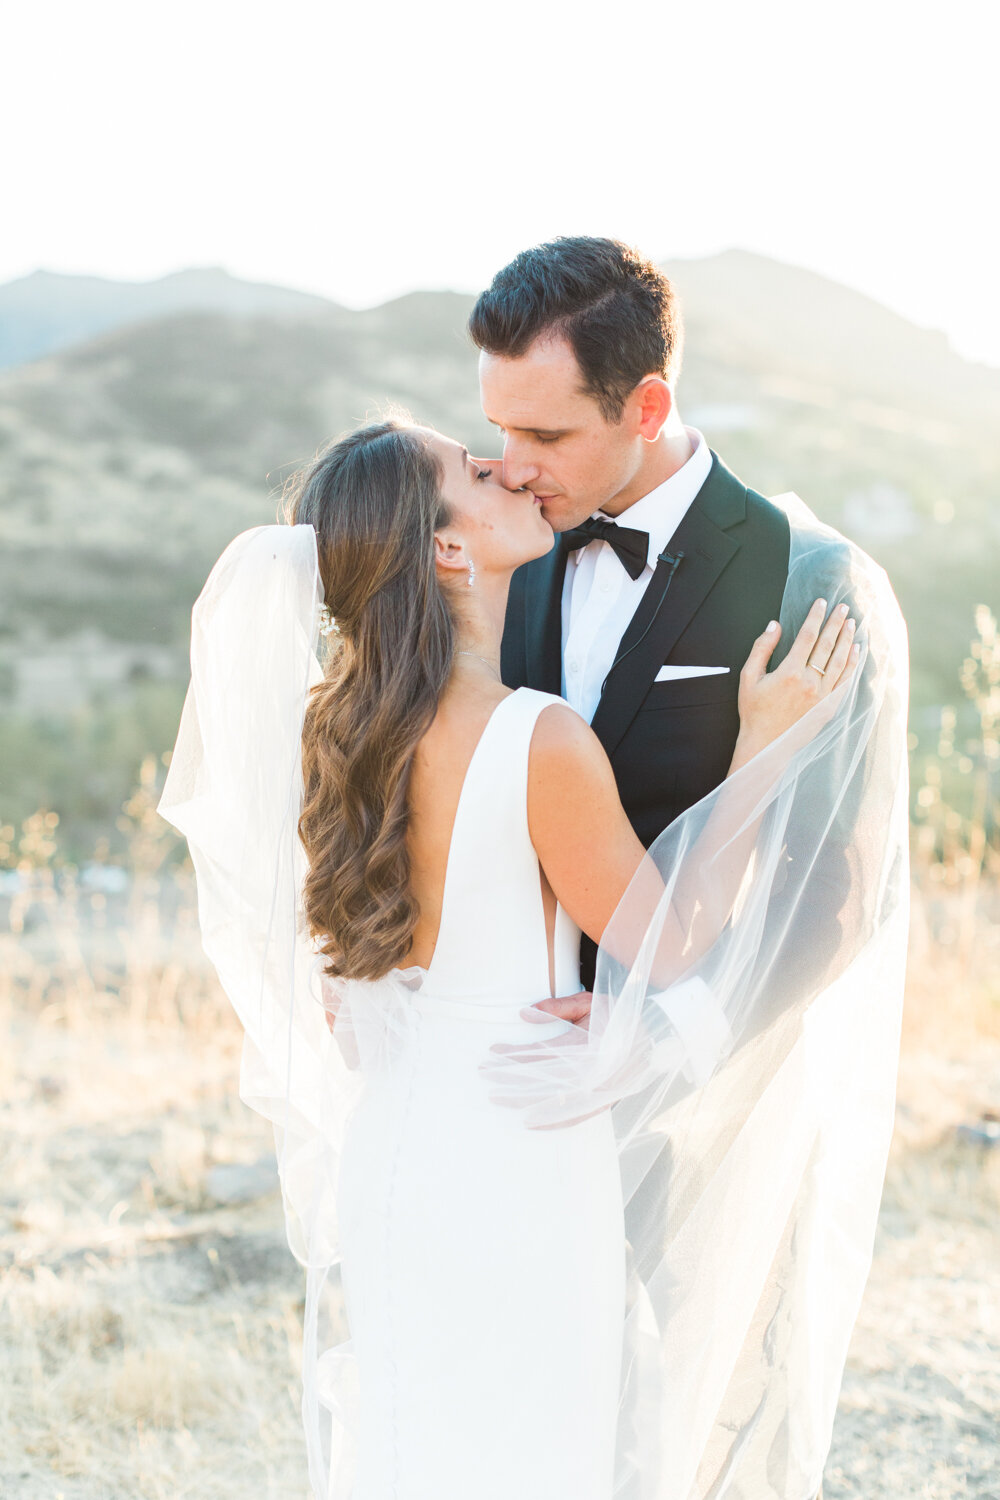 wisteria-photography.com | Wisteria Photography | Triunfo Creek Vineyards | Weddings Engagement | Southern California Photographer-27.jpg